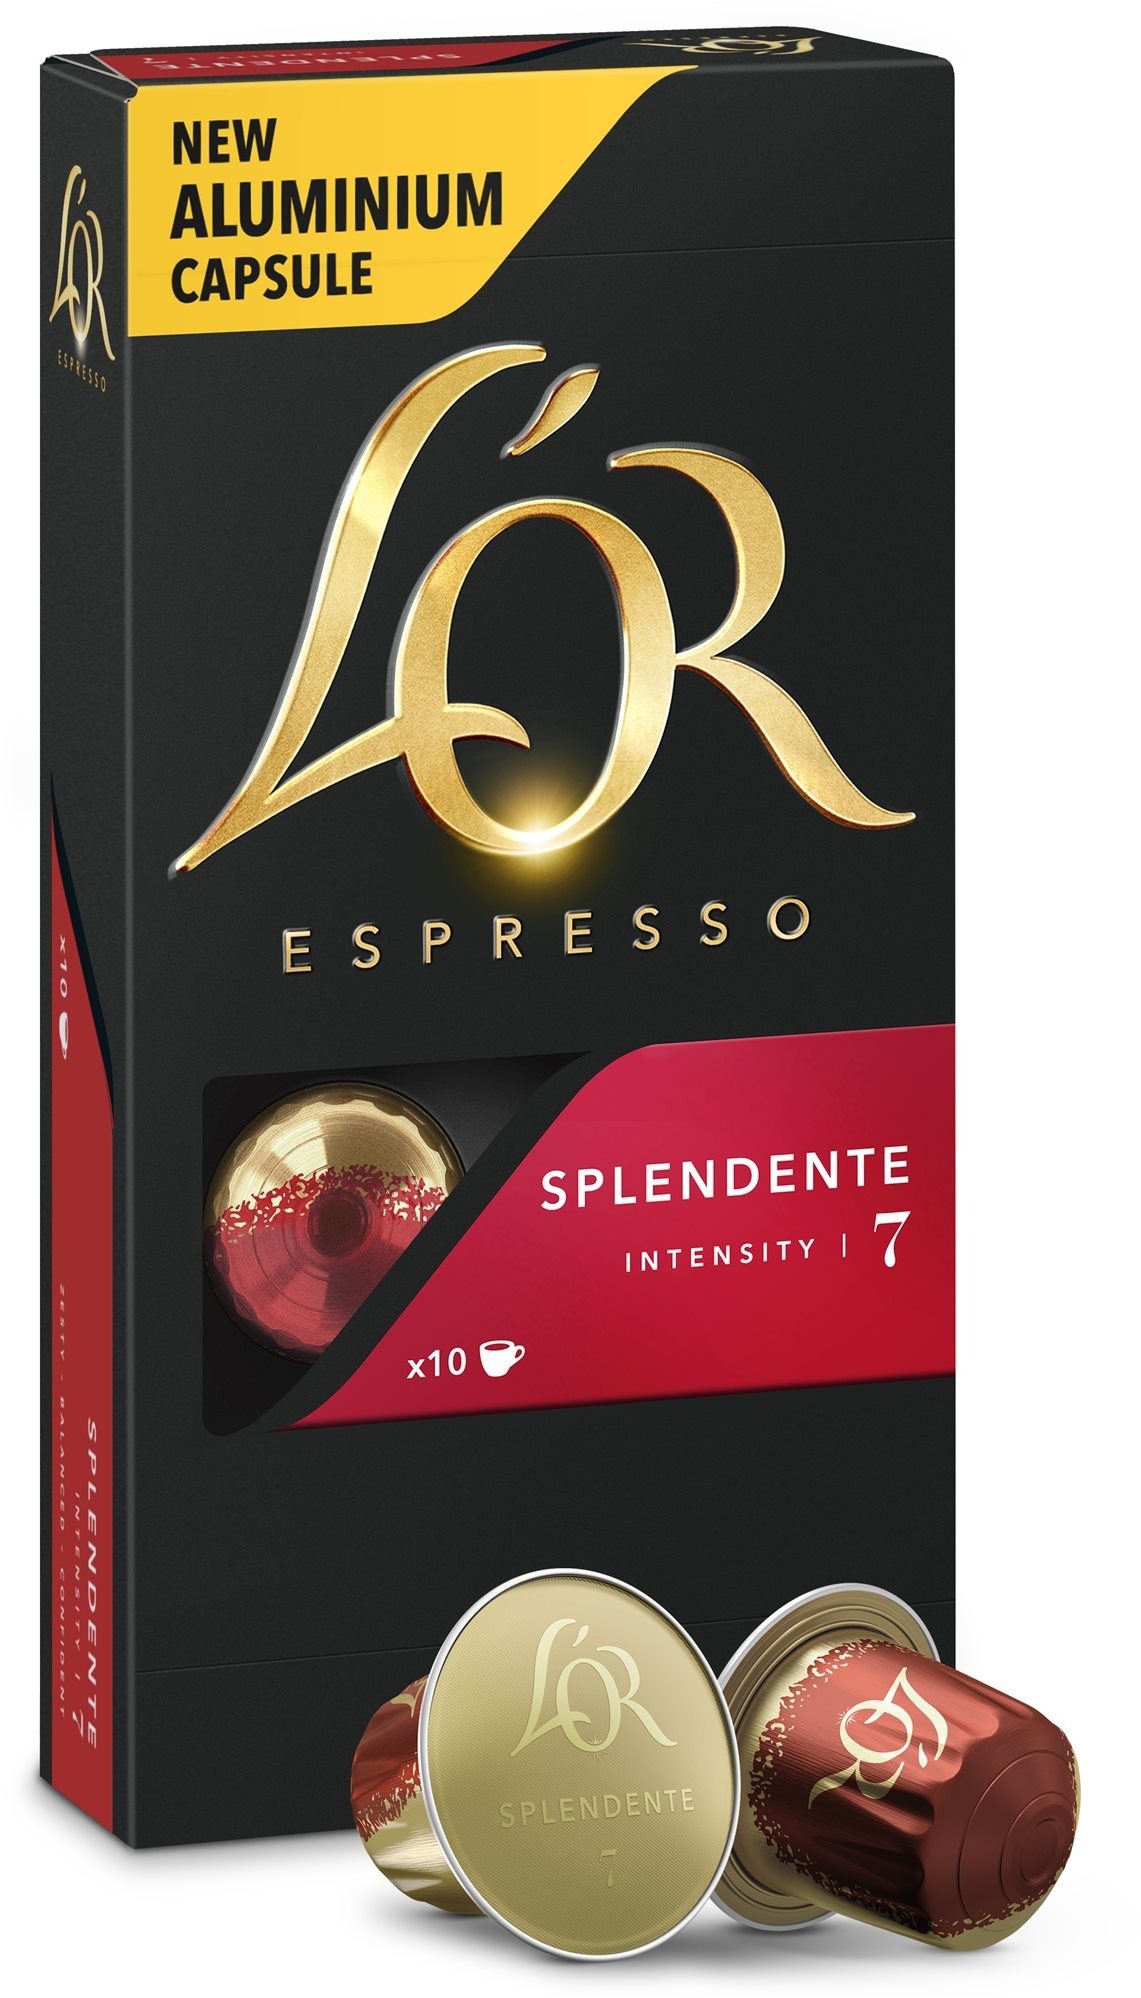 L'OR Espresso Splendente 10 darab, alumínium